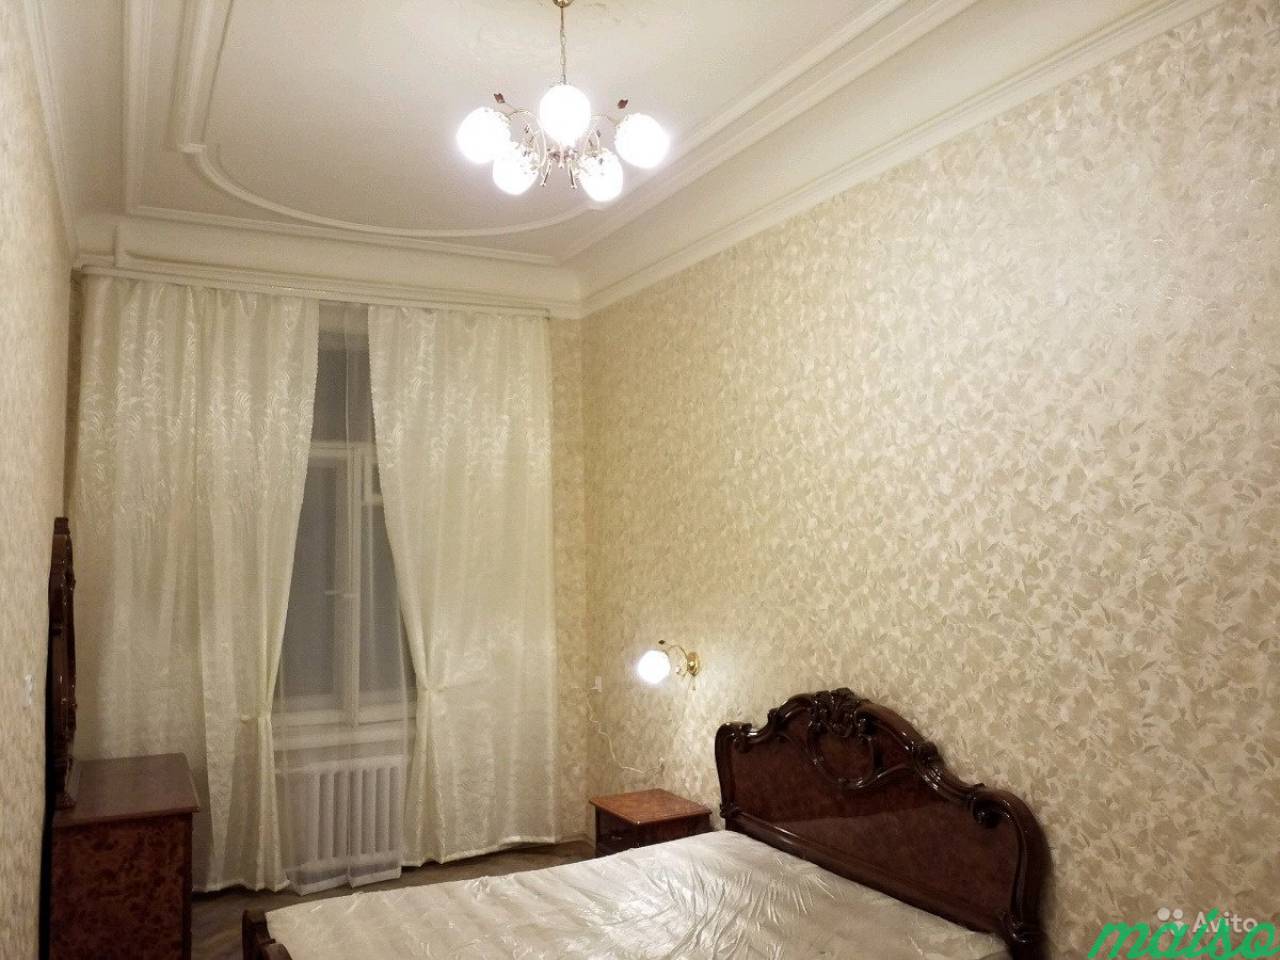 Комната 16 м² в 5-к, 3/5 эт. в Санкт-Петербурге. Фото 2